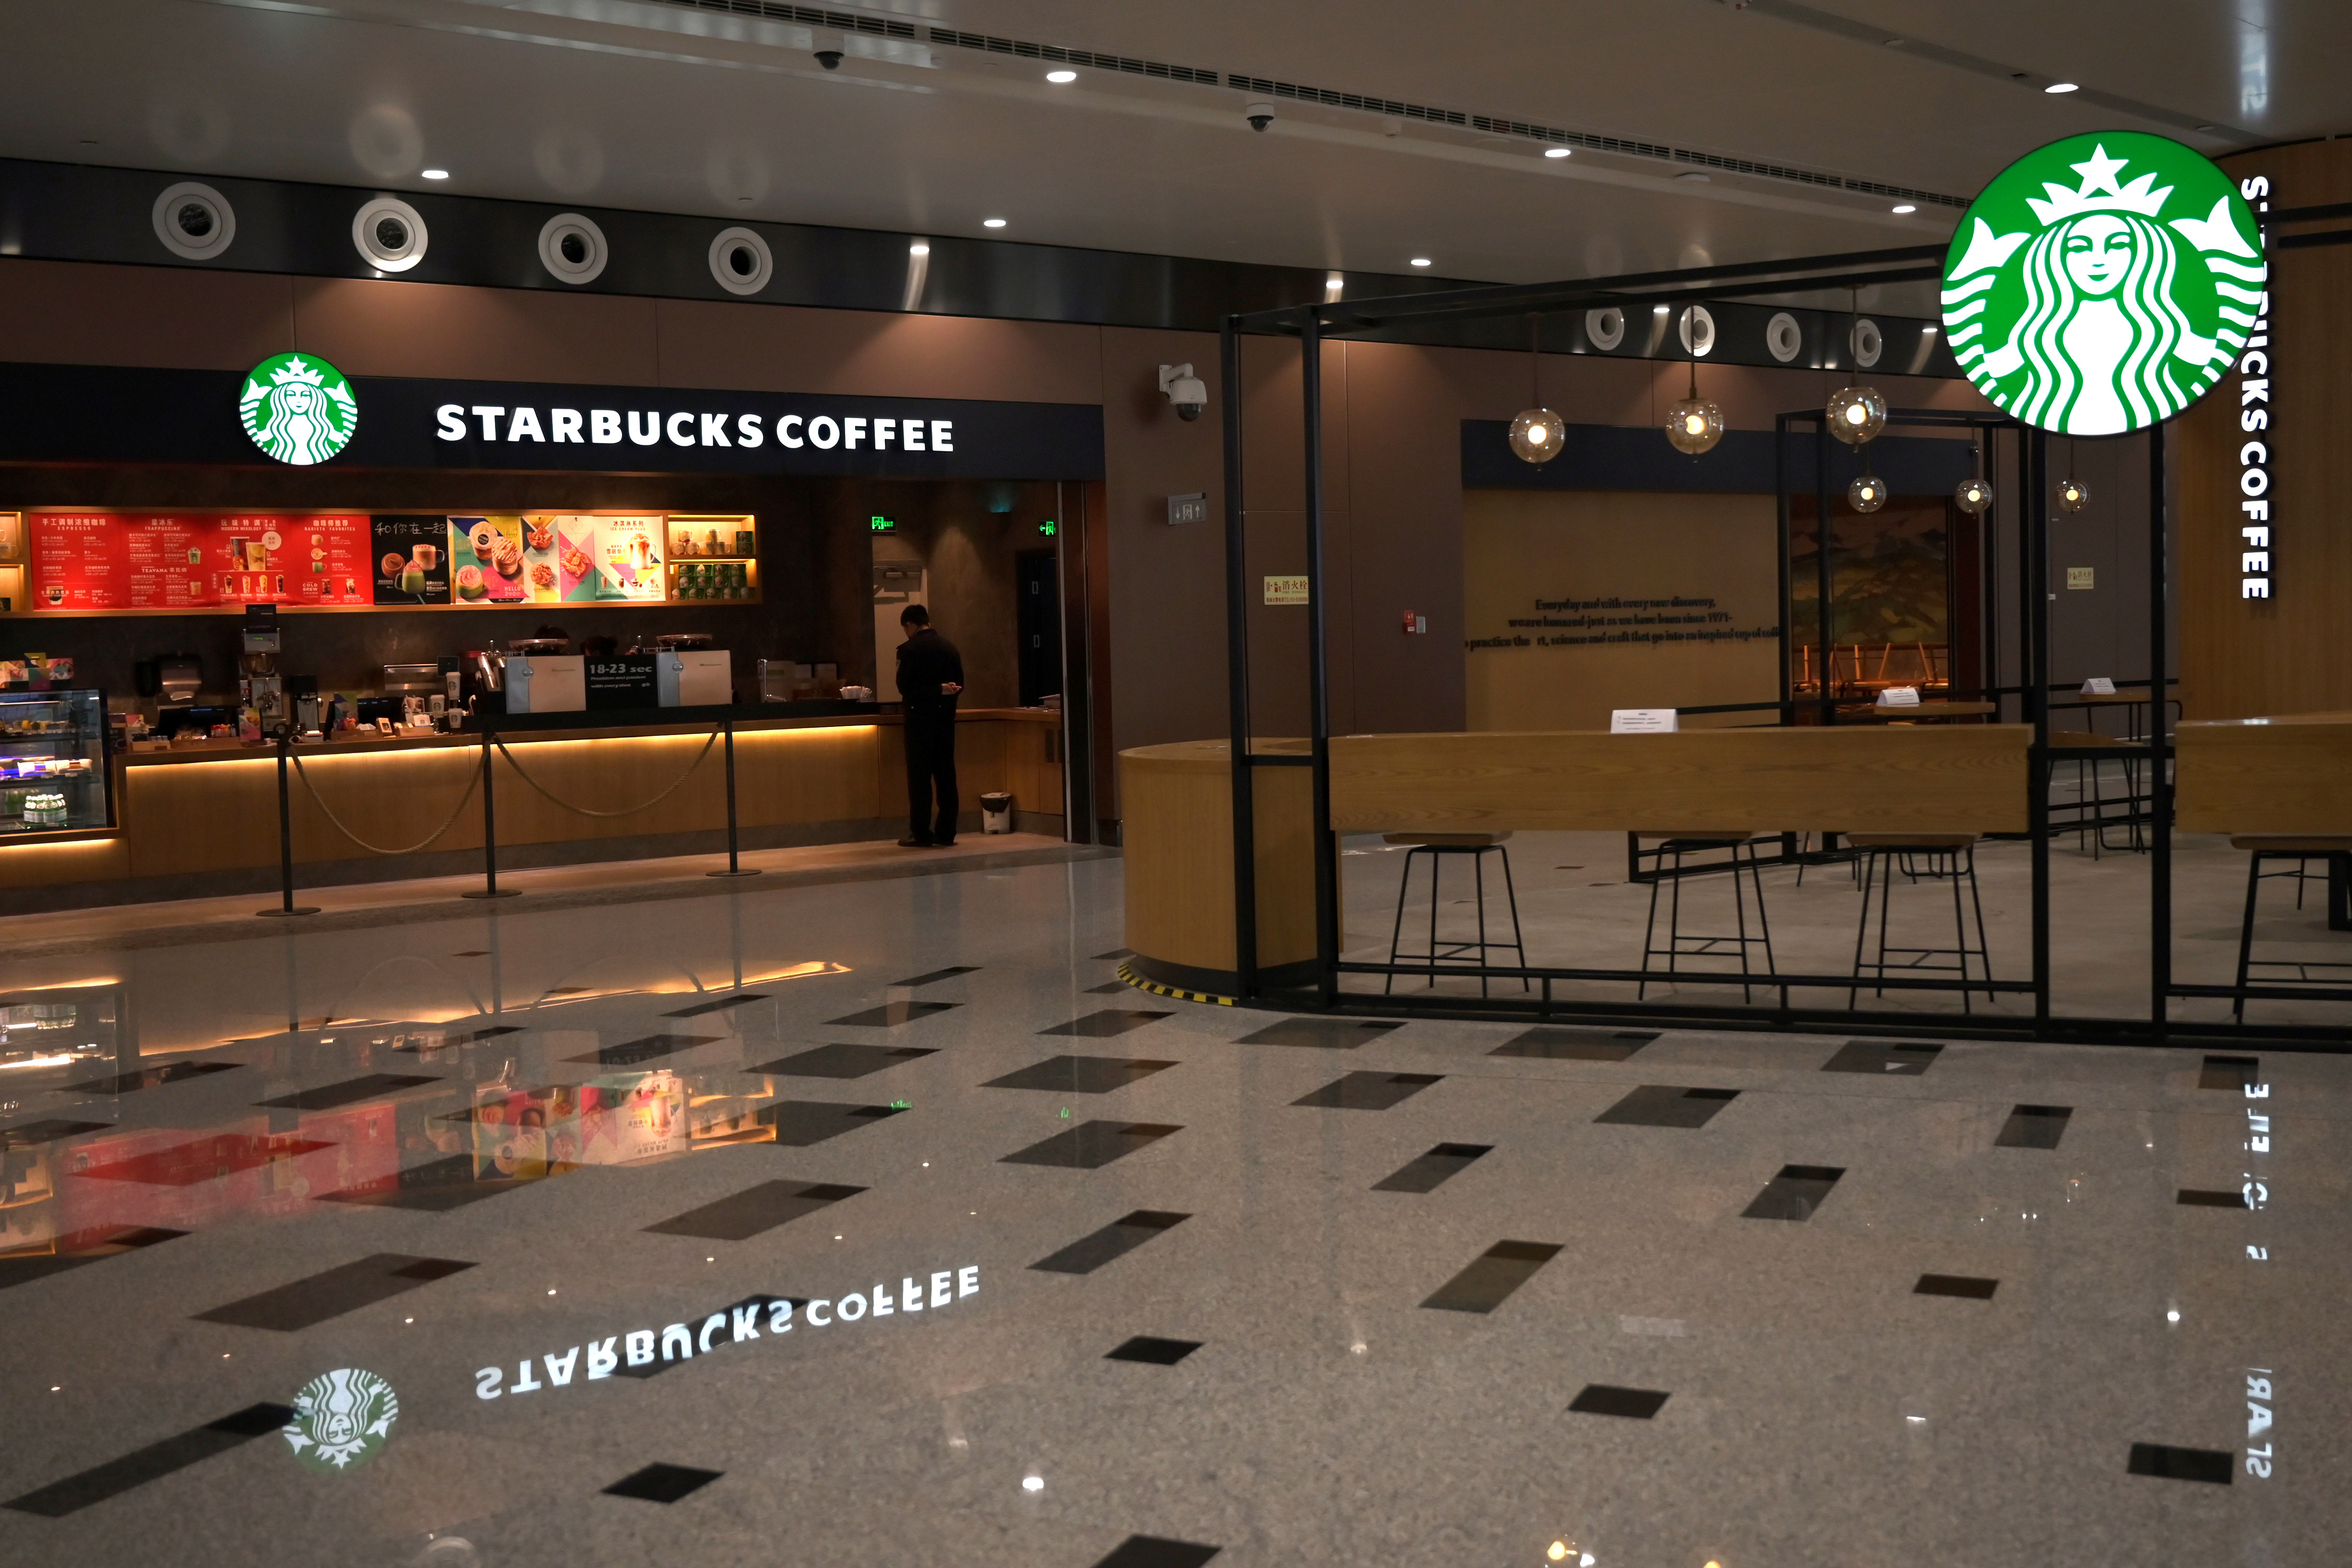 Buy Louis Vuitton Starbucks Cup Online In India -  India